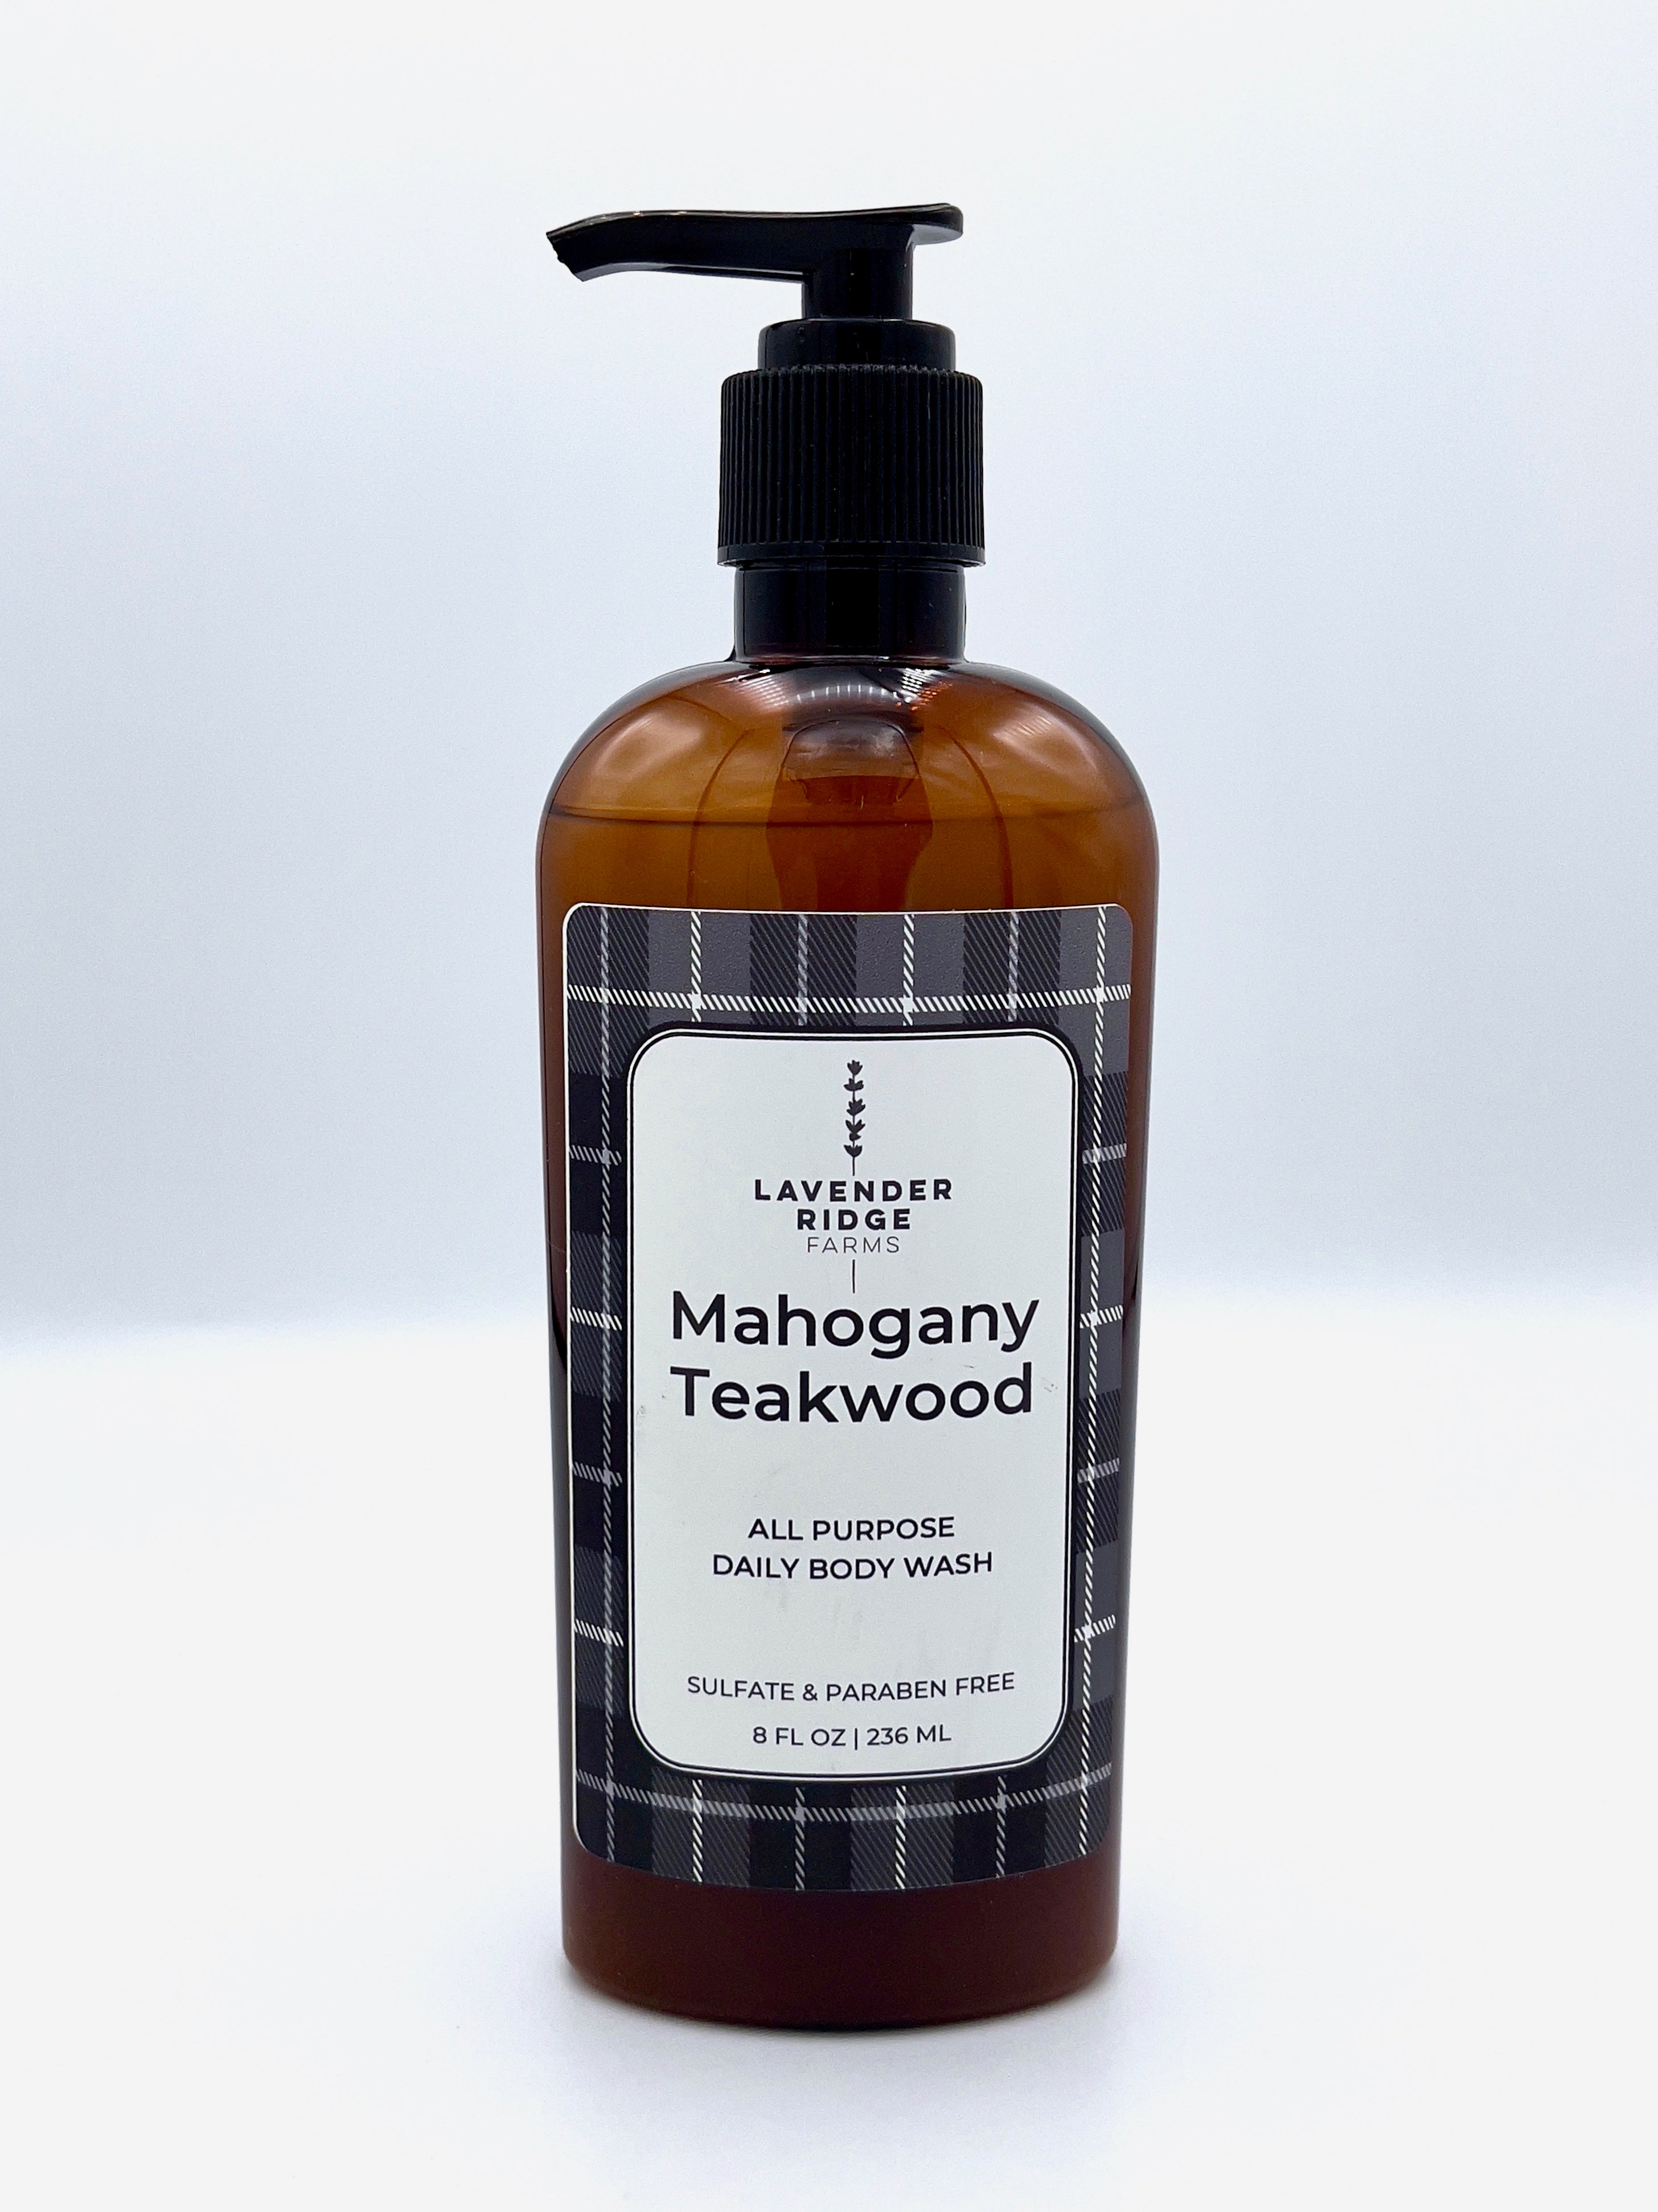 Bath & Body Works Mahogany Teakwood - Reviews